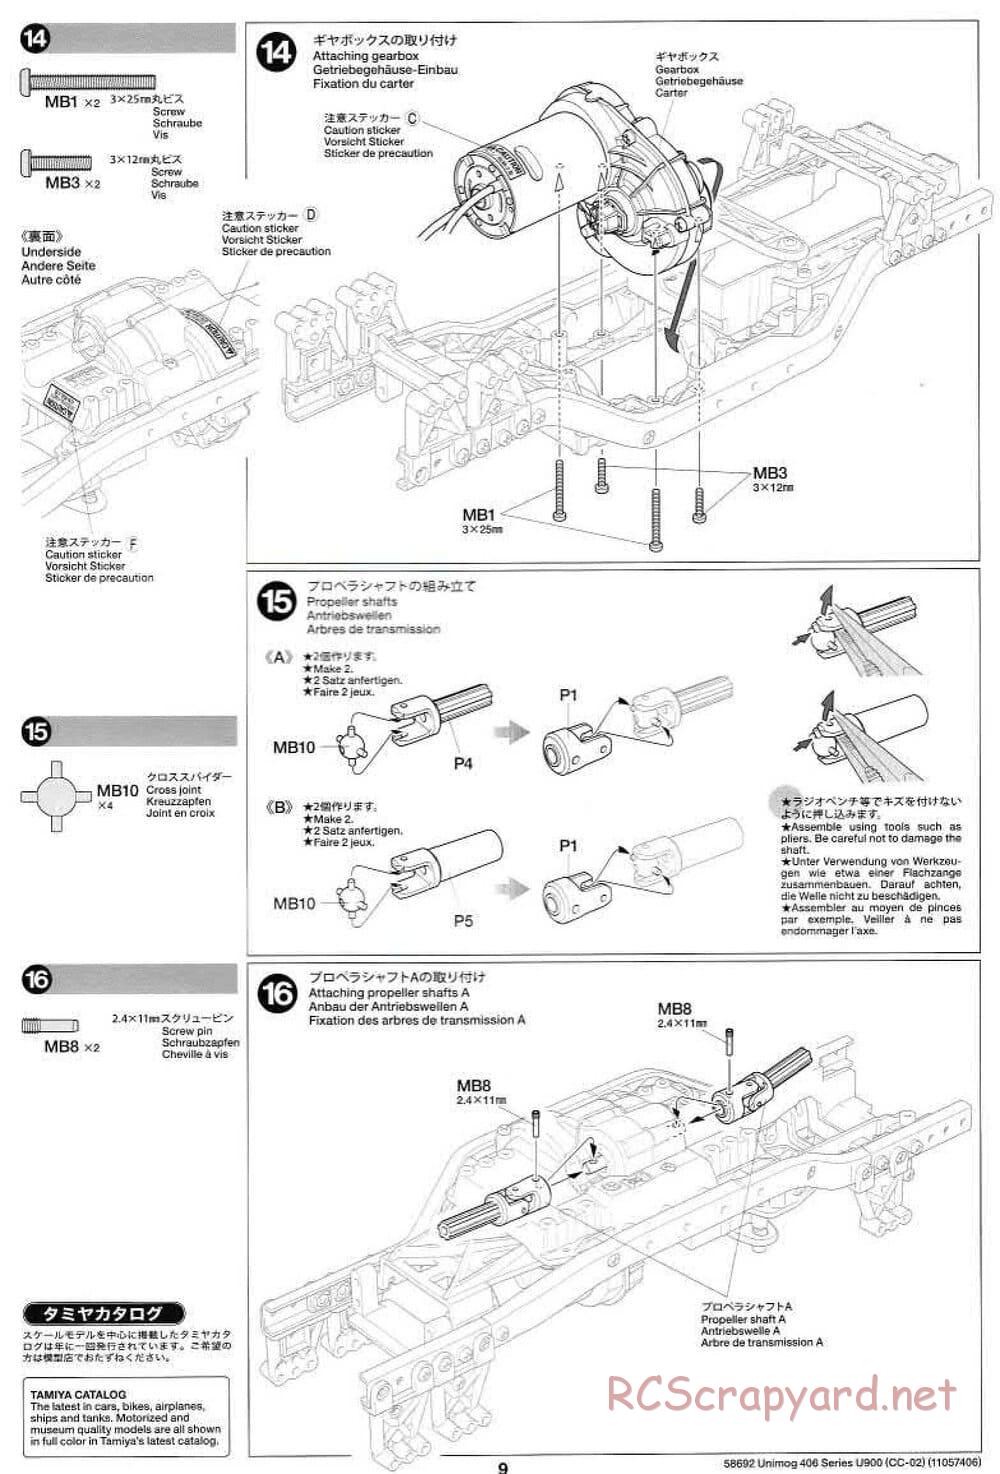 Tamiya - Mercedes-Benz Unimog 406 Series U900 - CC-02 Chassis - Manual - Page 9